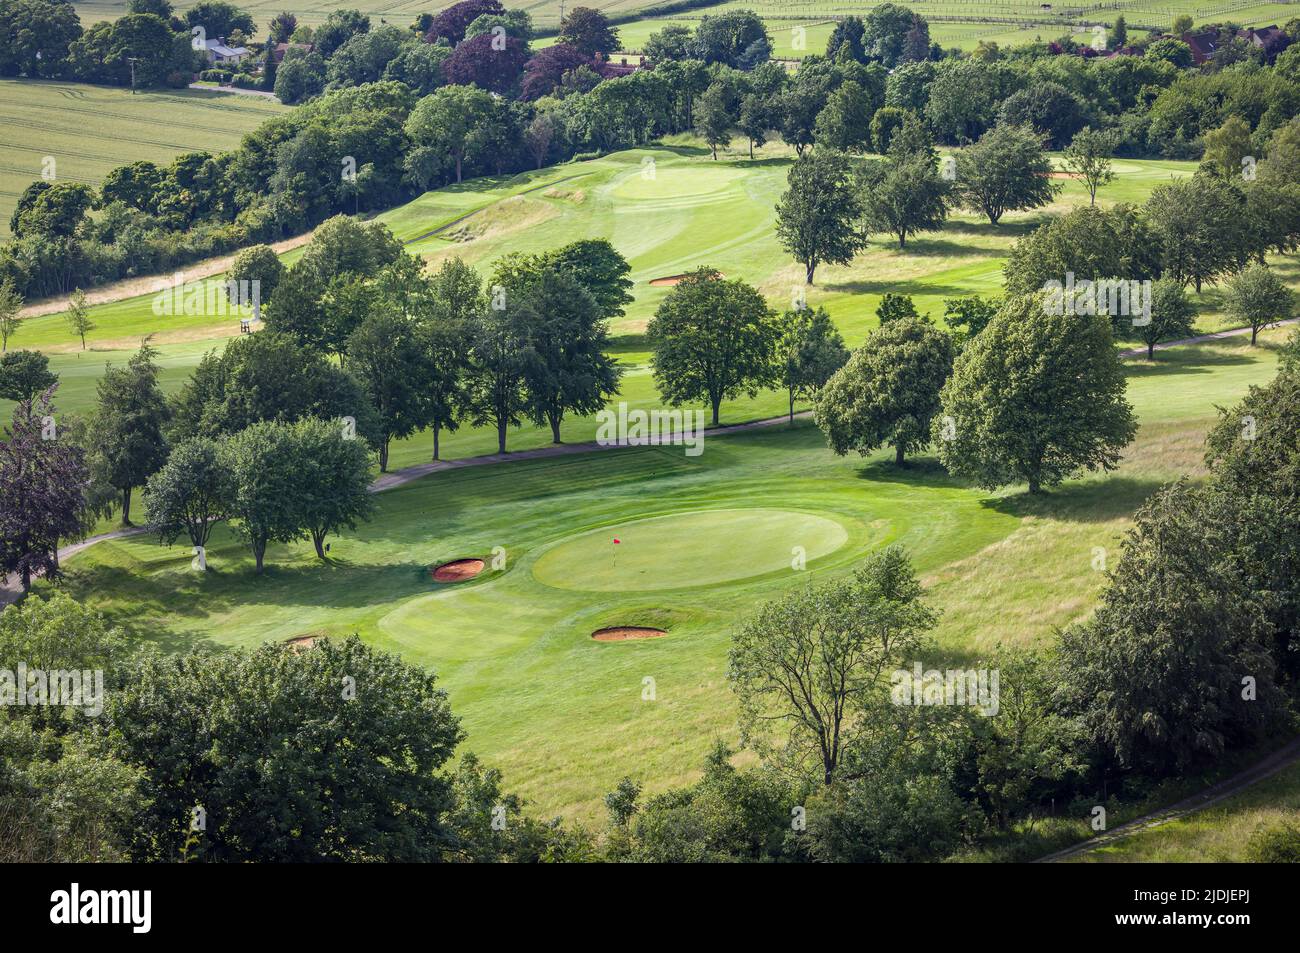 Paisaje de golf con árboles, vista aérea del campo de golf inglés, Buckinghamshire, Inglaterra, Reino Unido Foto de stock